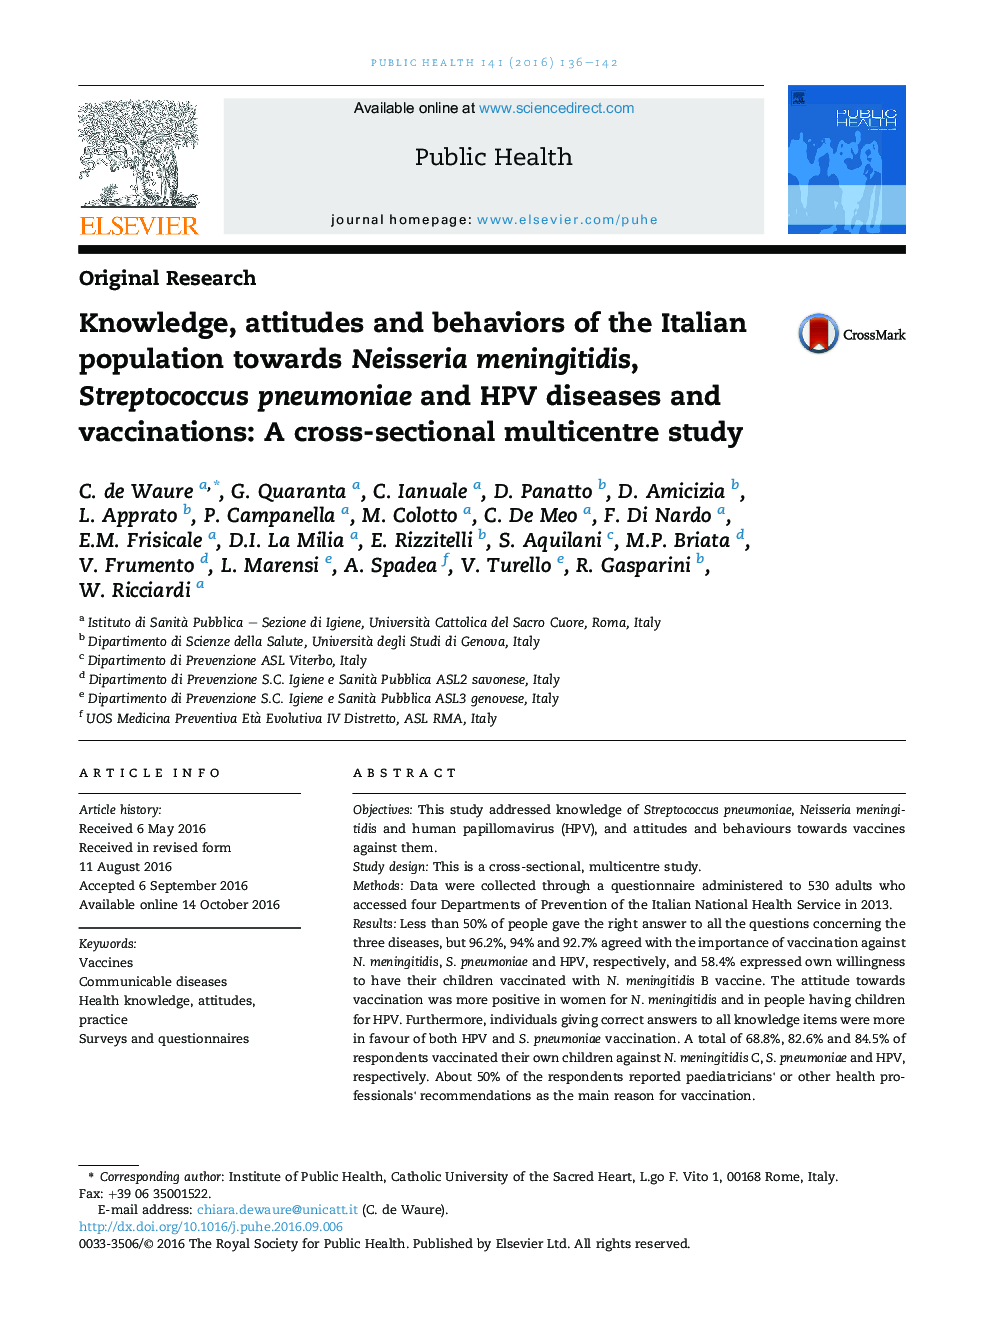 Knowledge, attitudes and behaviors of the Italian population towards Neisseria meningitidis, StreptococcusÂ pneumoniae and HPV diseases and vaccinations: AÂ cross-sectional multicentre study